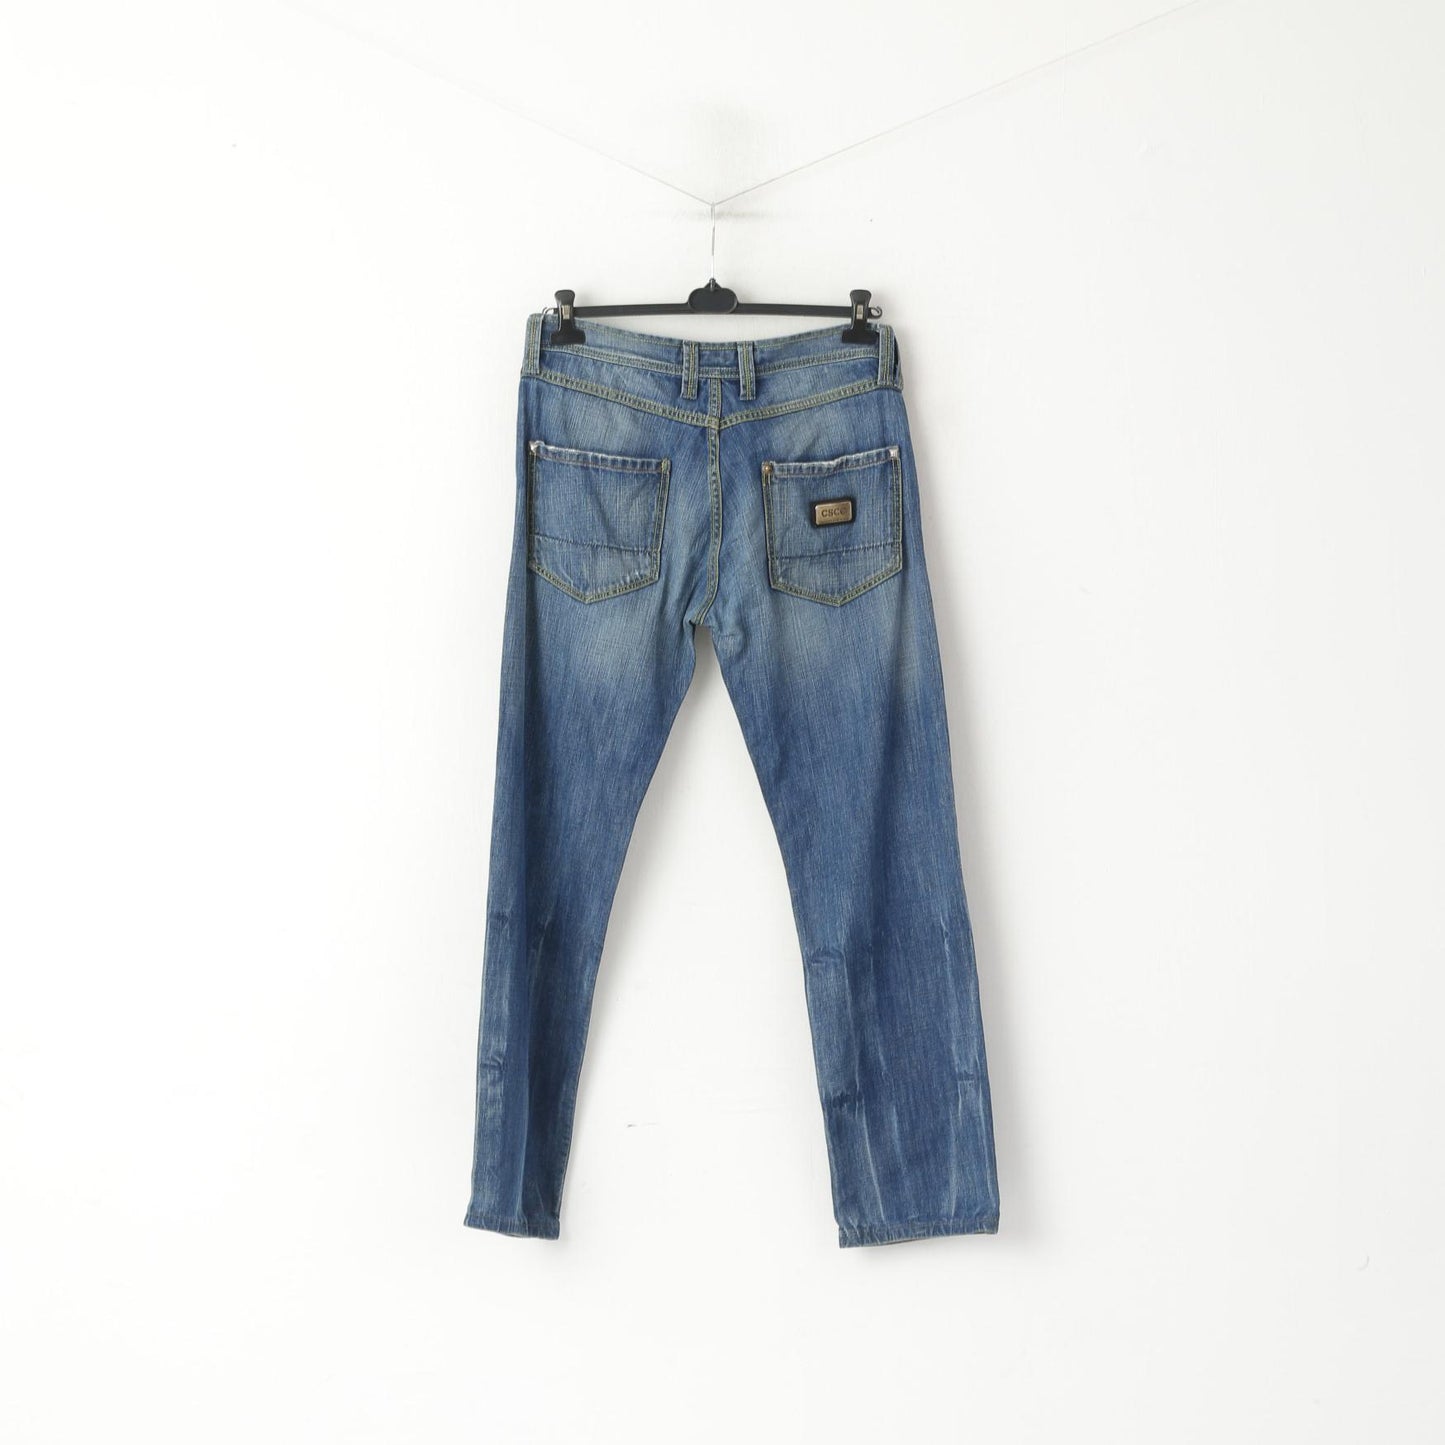 Casucci King Jeans Homme 36 50 Jeans Pantalon Marine Coton Denim Pantalon Droit